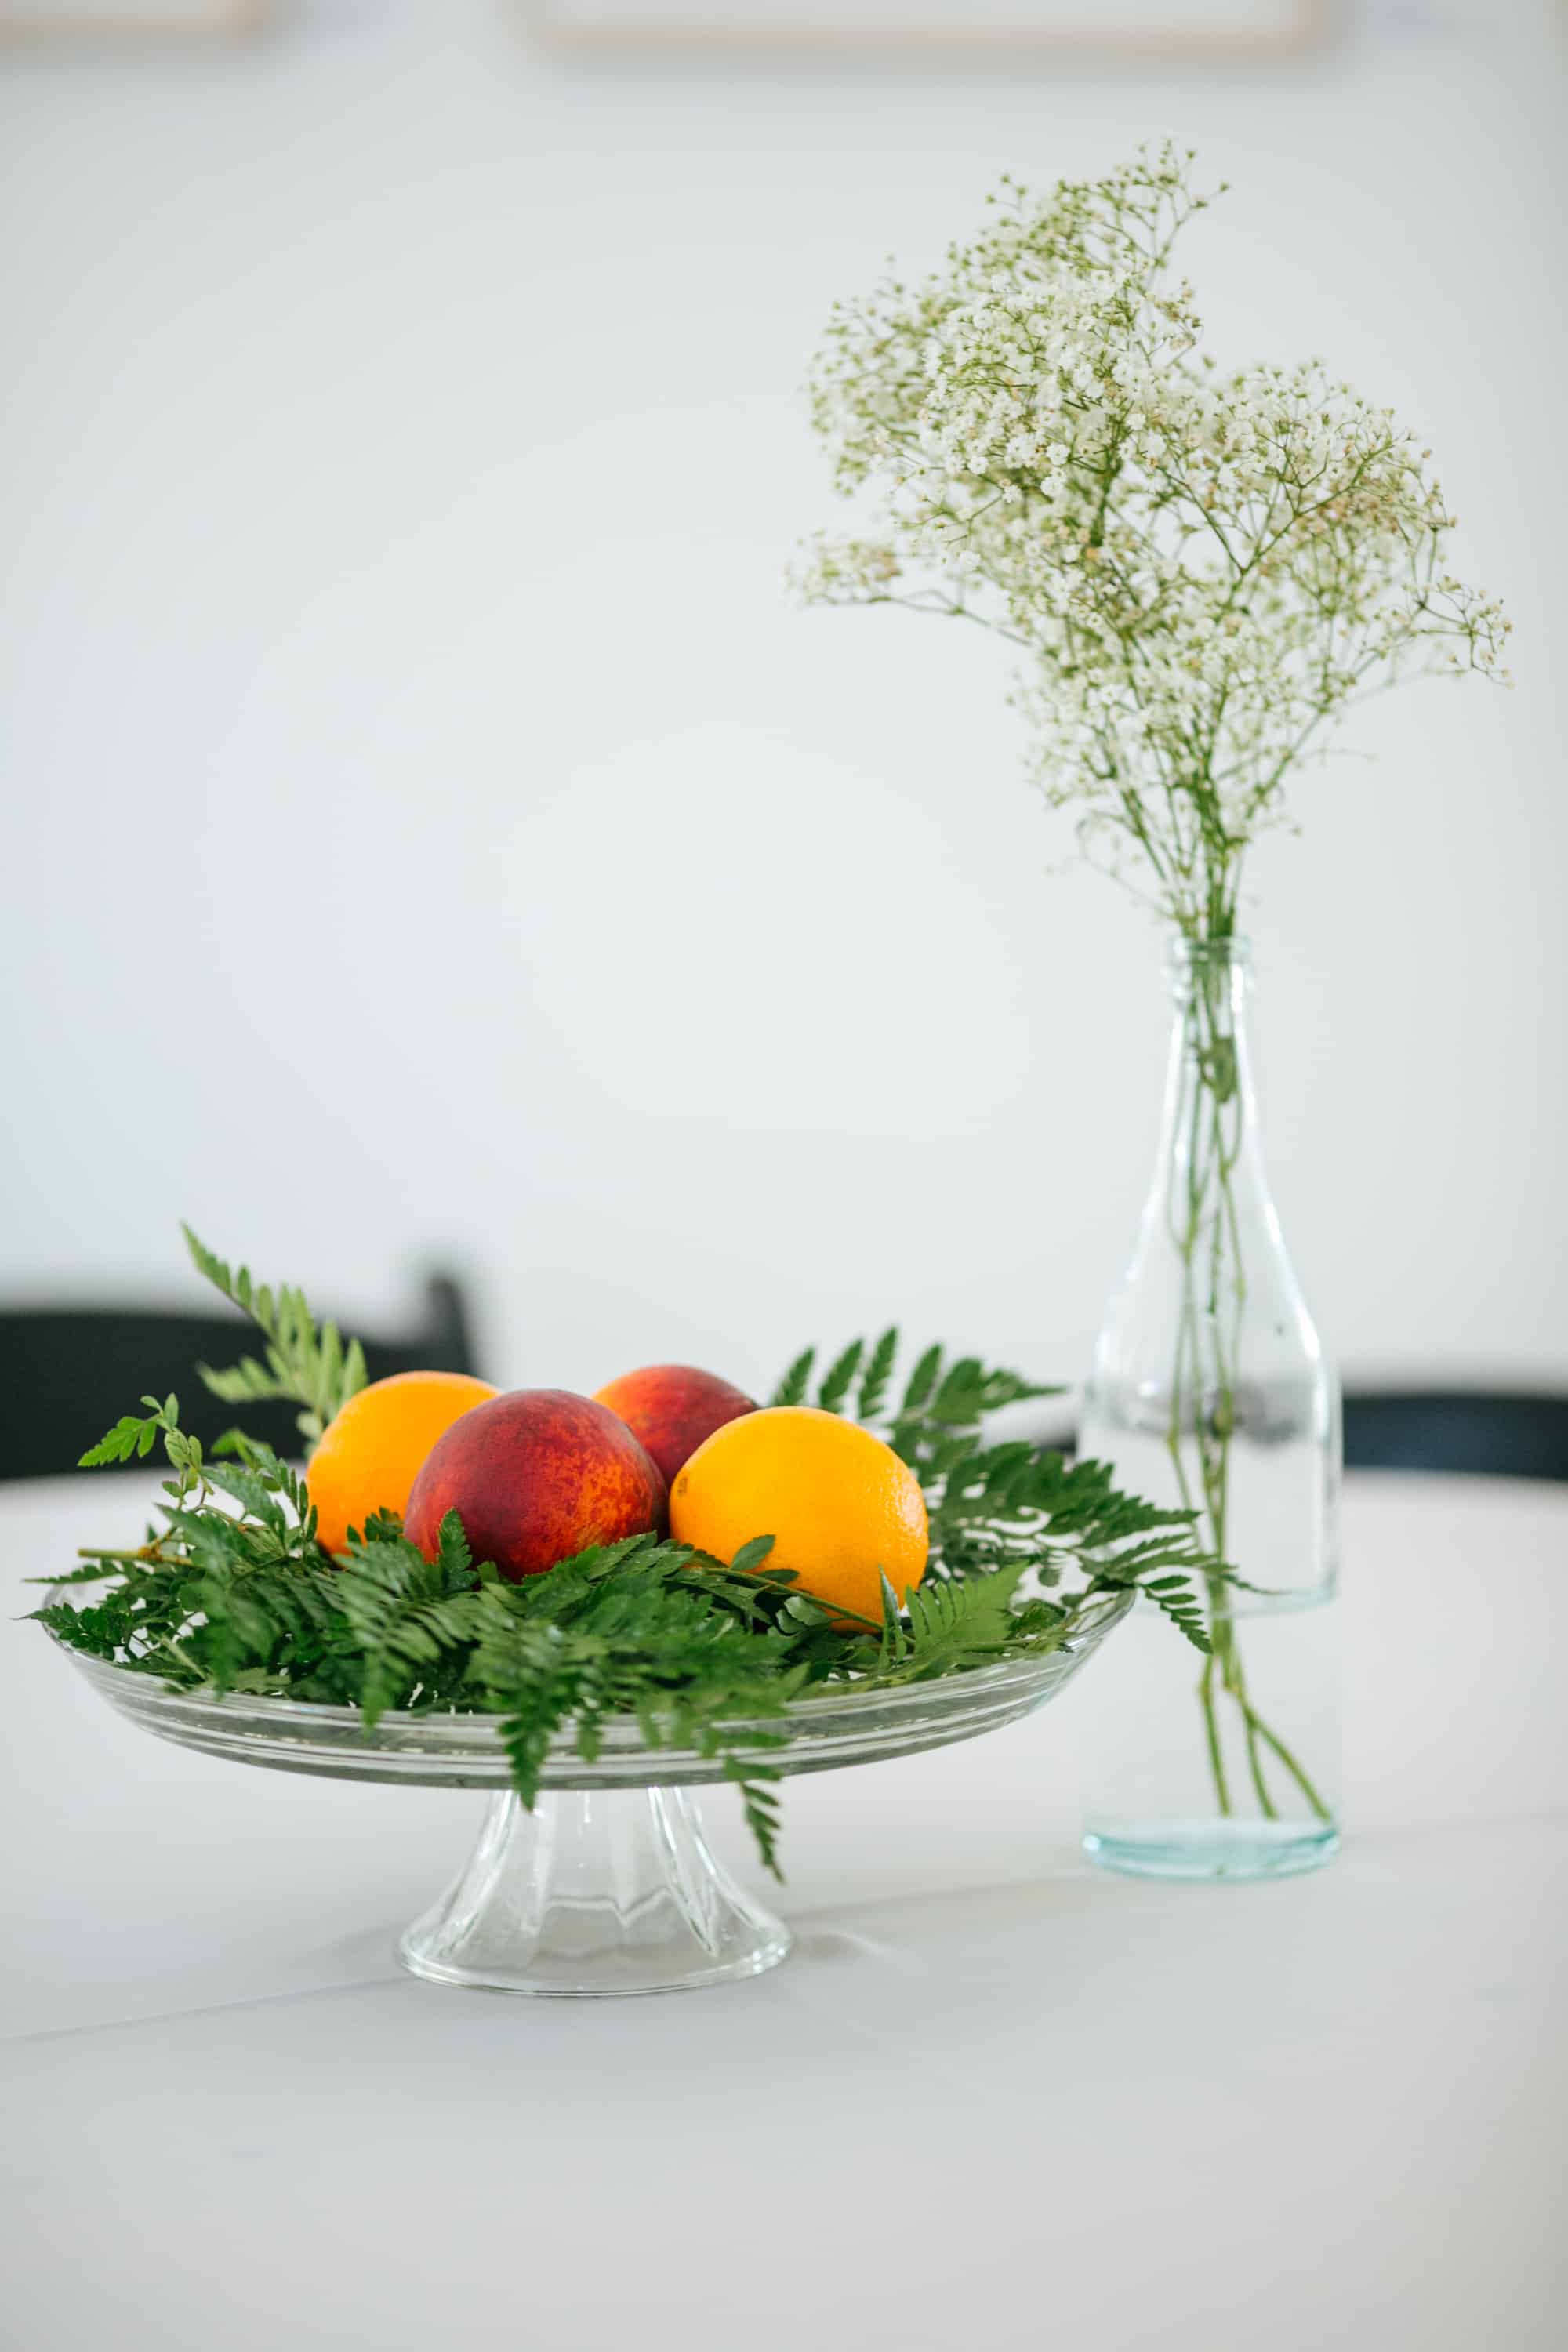 simple wedding decor, center pieces, diy decor, simple table decorations, using fruit as centerpieces, using fruit in centerpieces